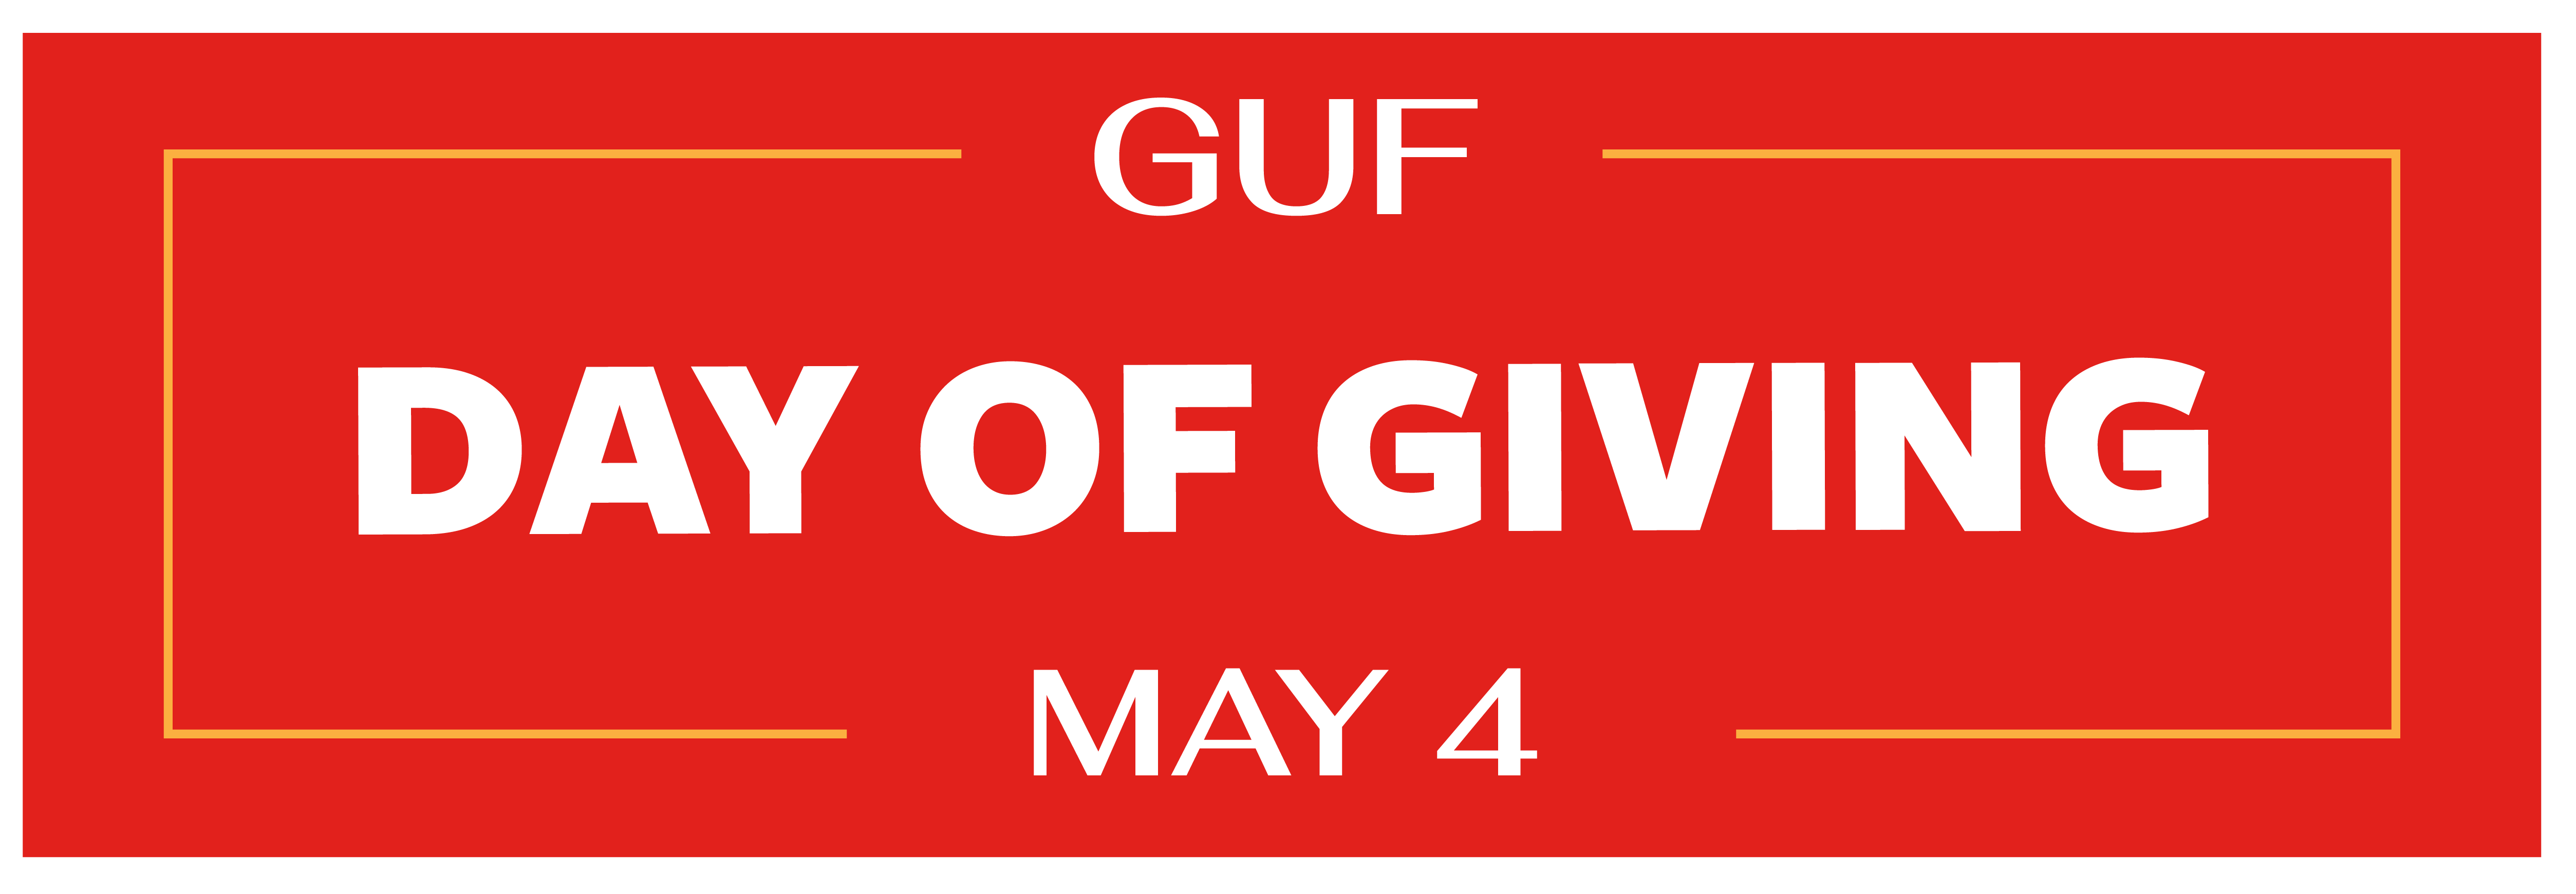 GUF GIVING DAY - Gregorian University Foundation